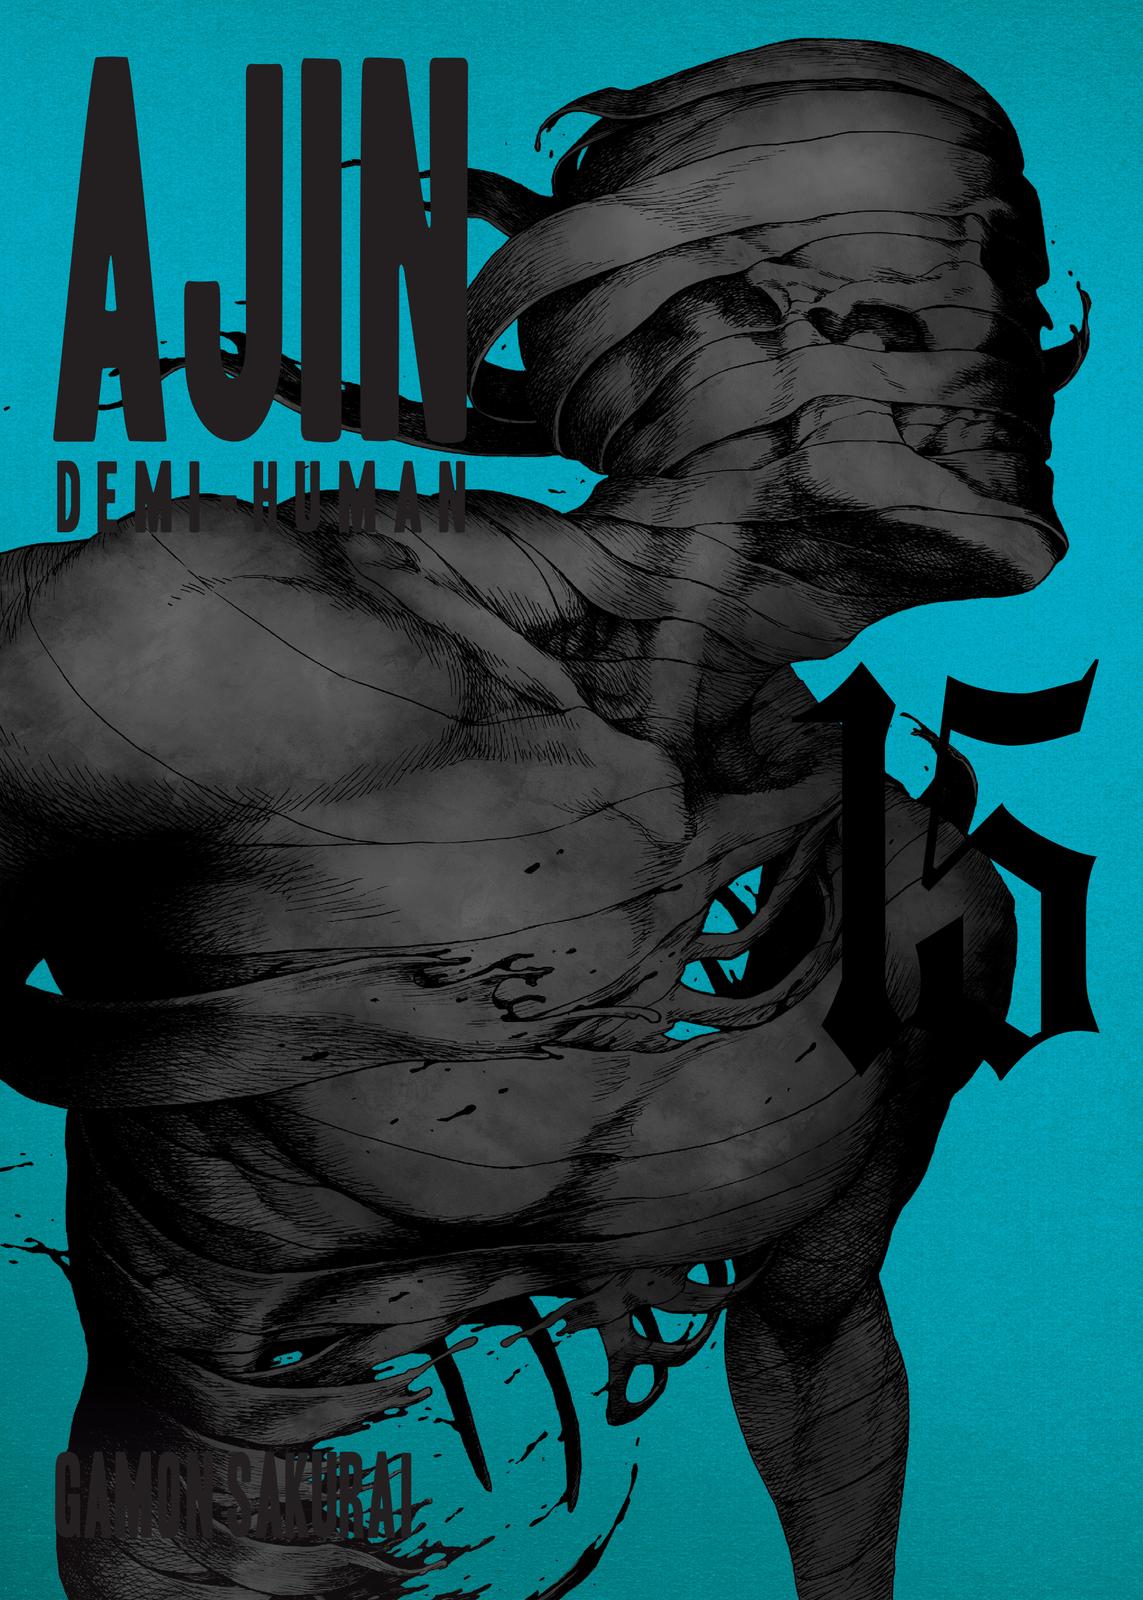 Ajin Good! Afternoon Magazine cover  Ajin anime, Ajin manga, Manga covers